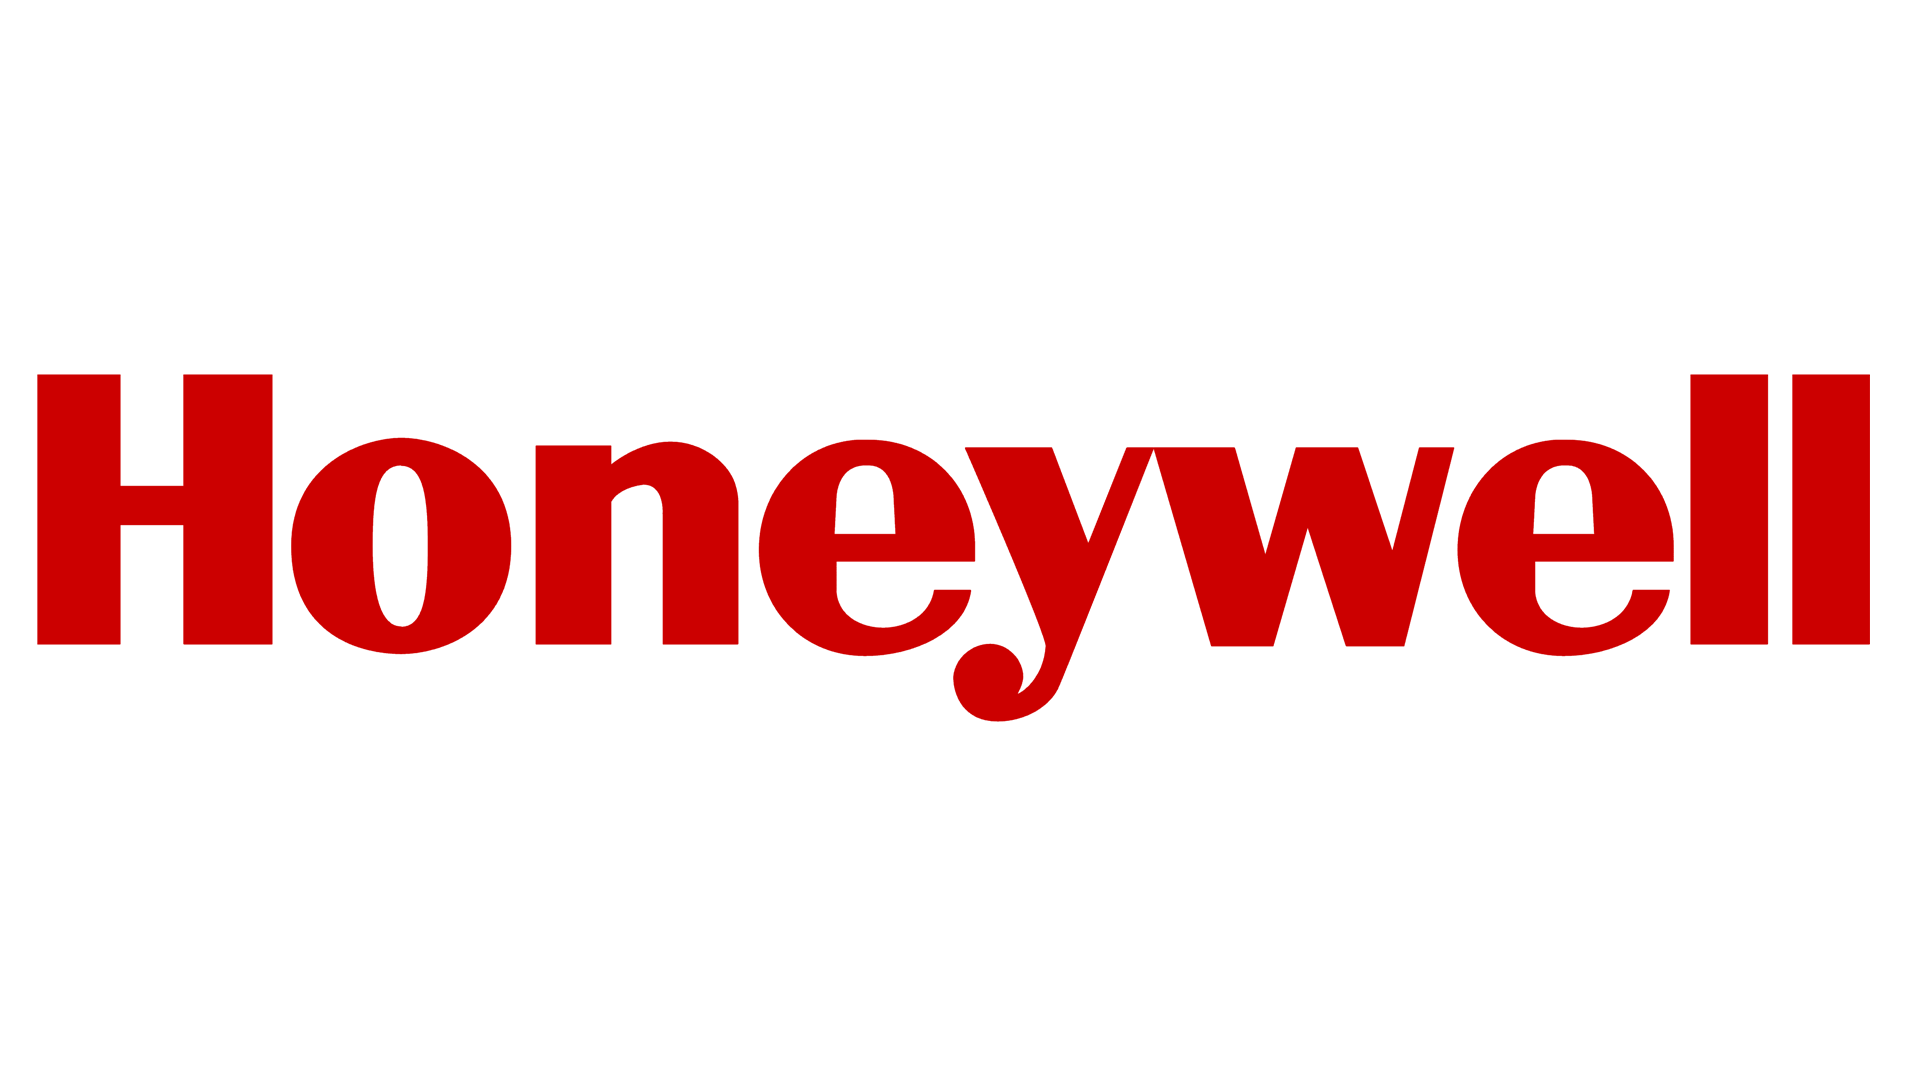 Logo Honeywell, simbol Honeywell, semnificație, istorie și evoluție